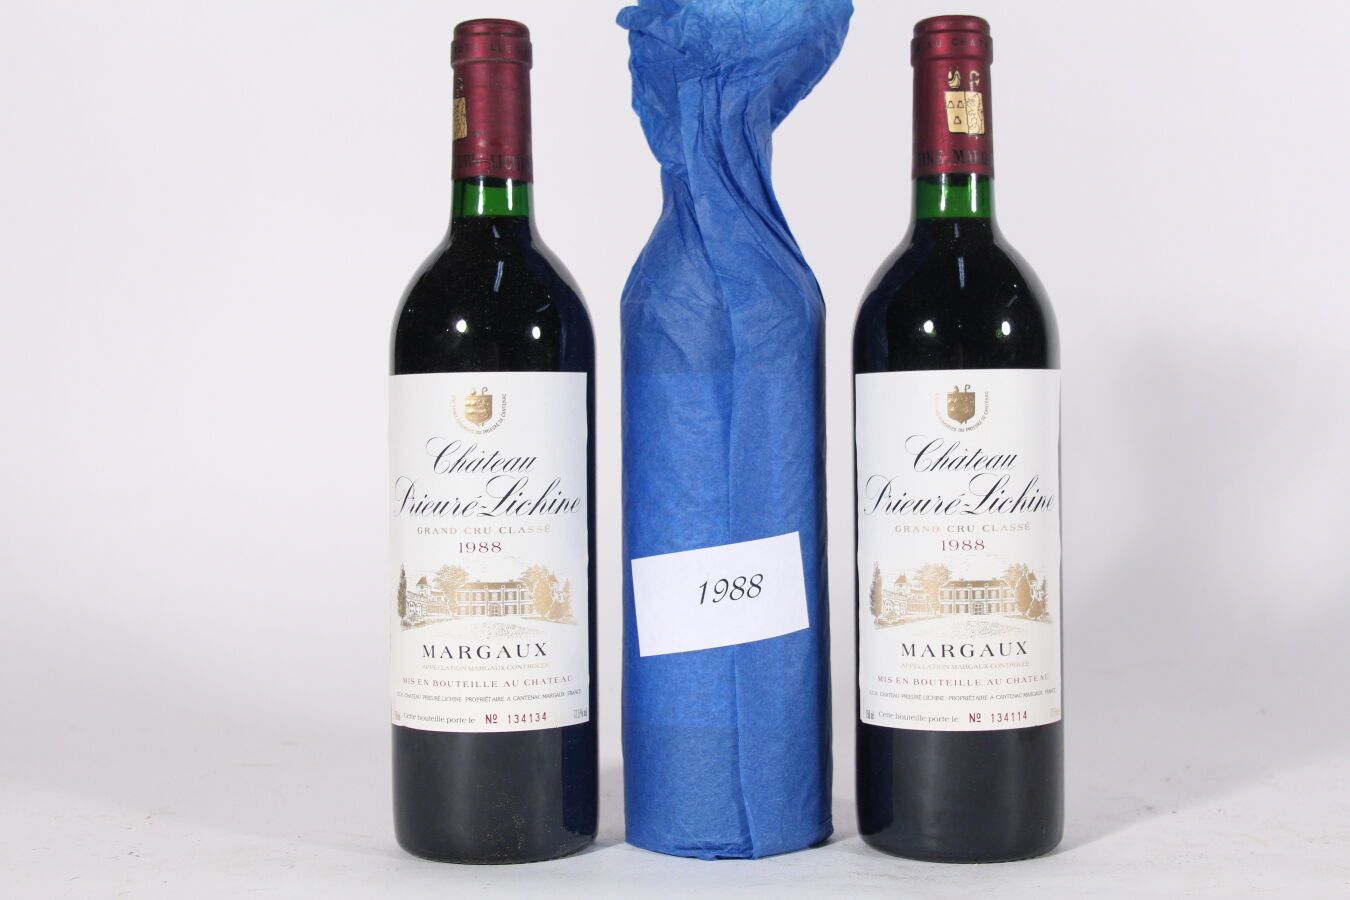 Null 1988 - Château Prieuré-Lichine
Rosso Margaux - 3 bottiglie CBO